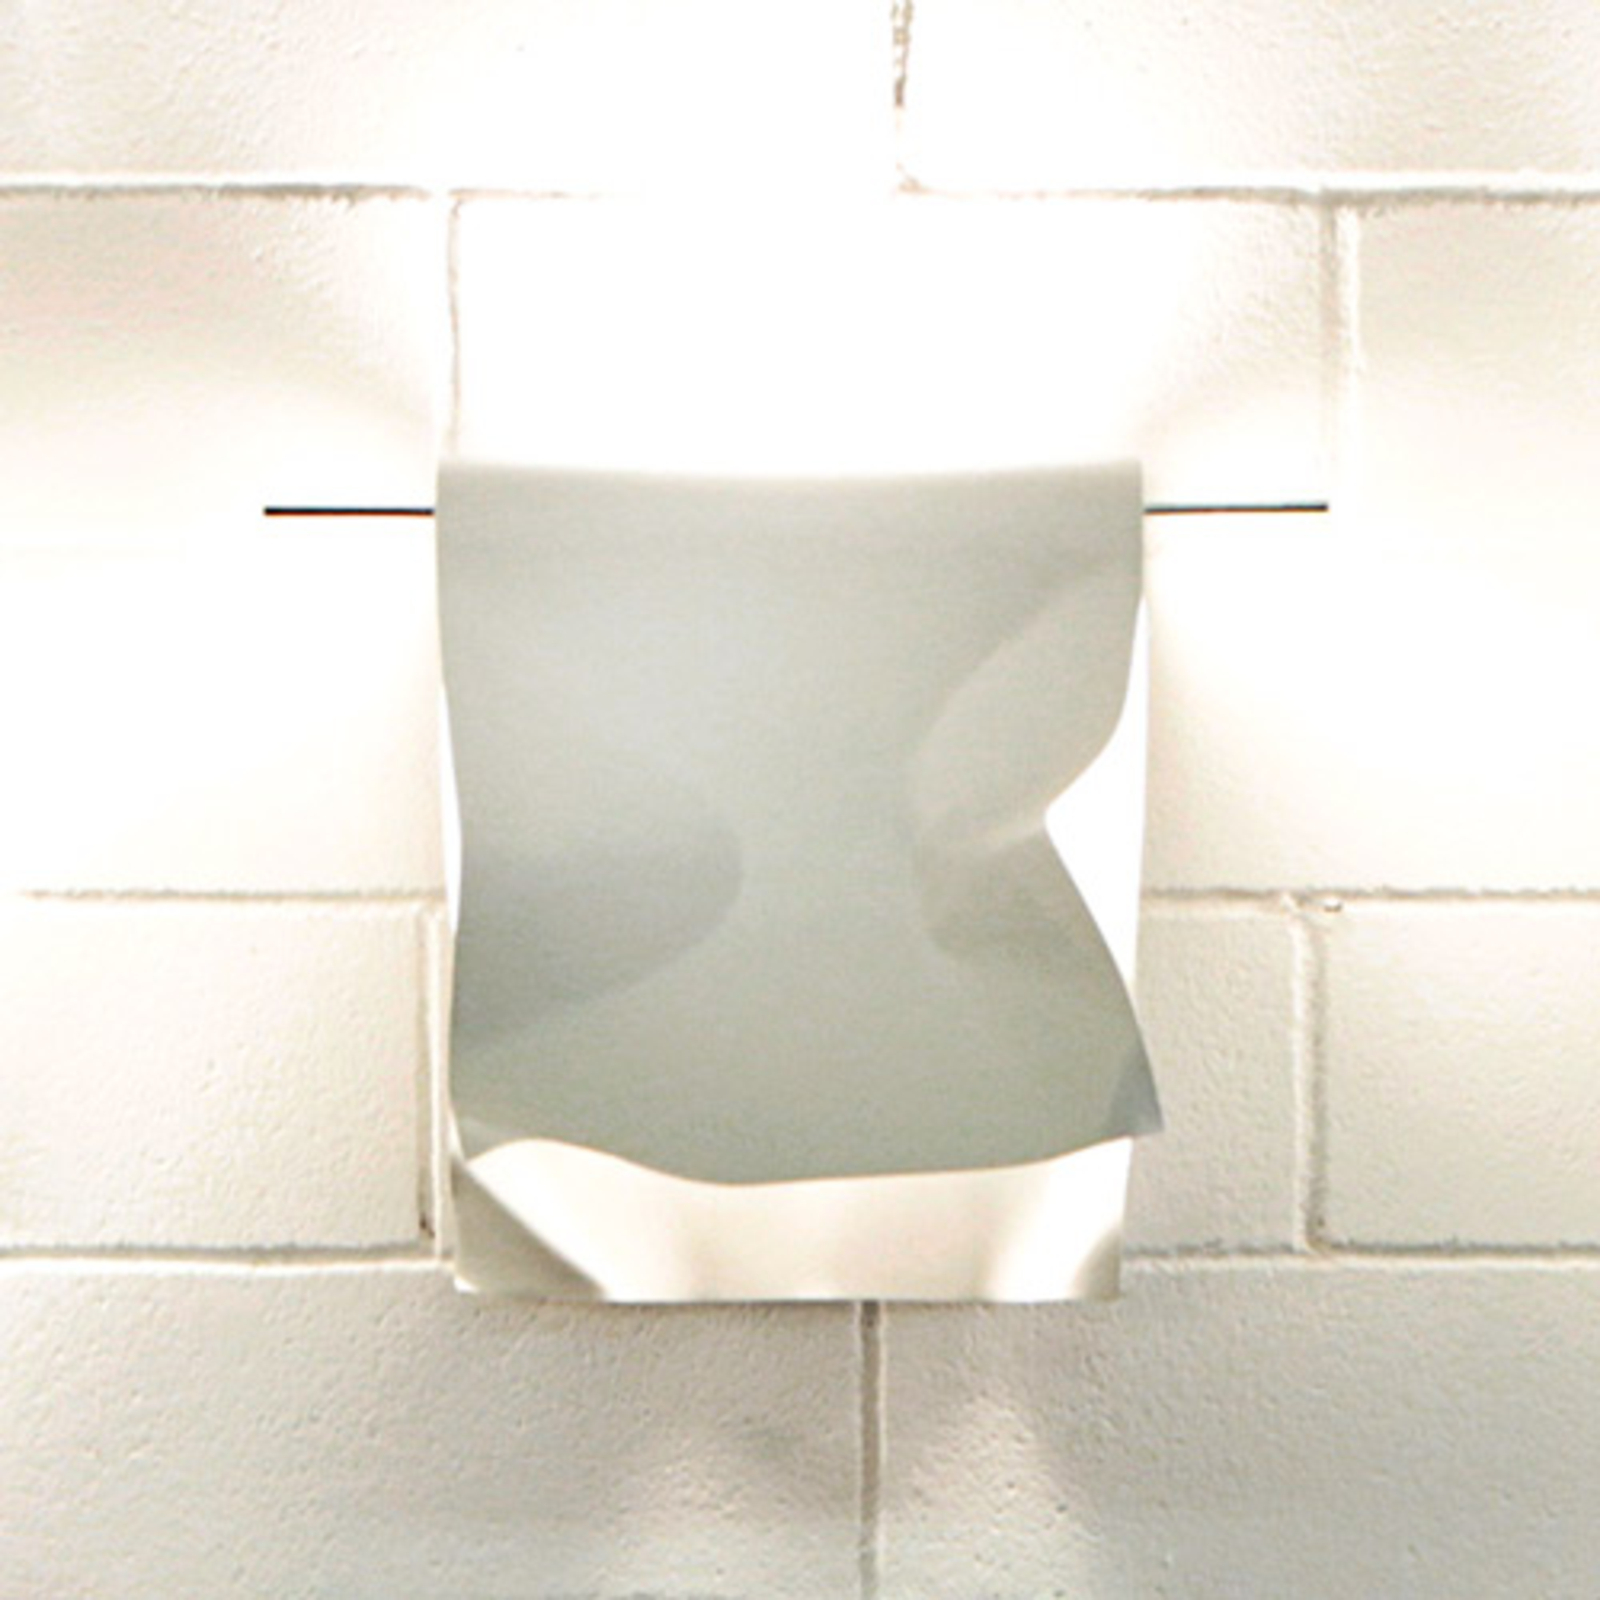 Knikerboker StENDIMI - biały kinkiet LED 40 cm